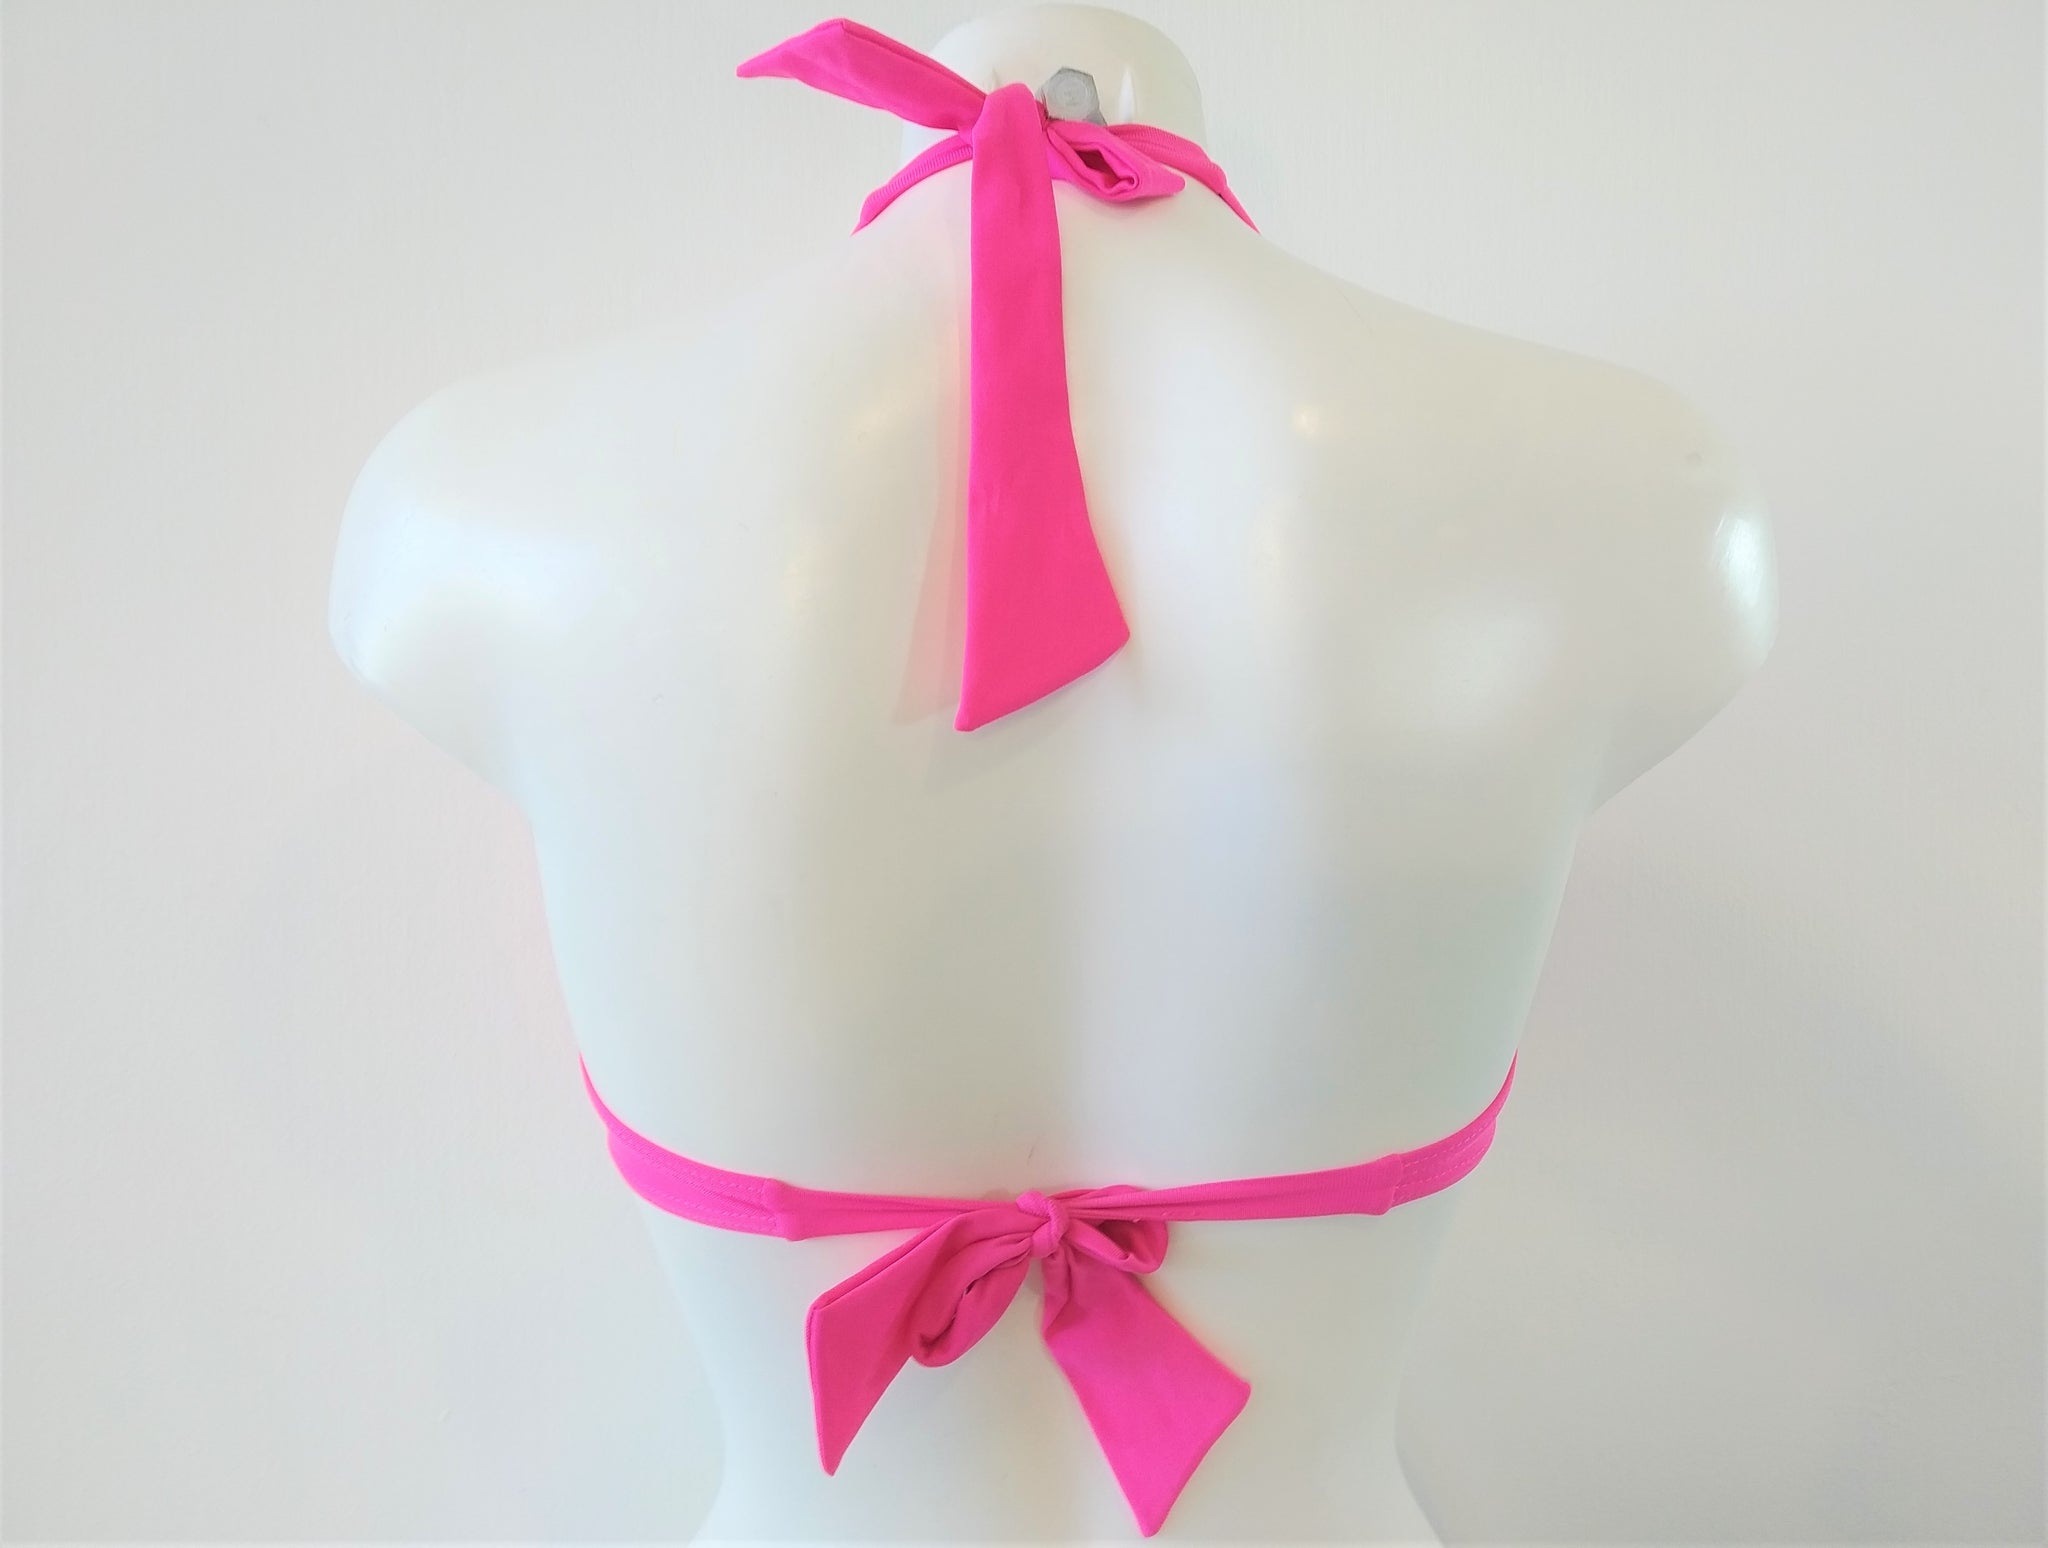 bikinn-bikini rose fushia rembourre,pink strapless bandeau bikini push-up bra hot pink, traje de baño bandeau acolchado